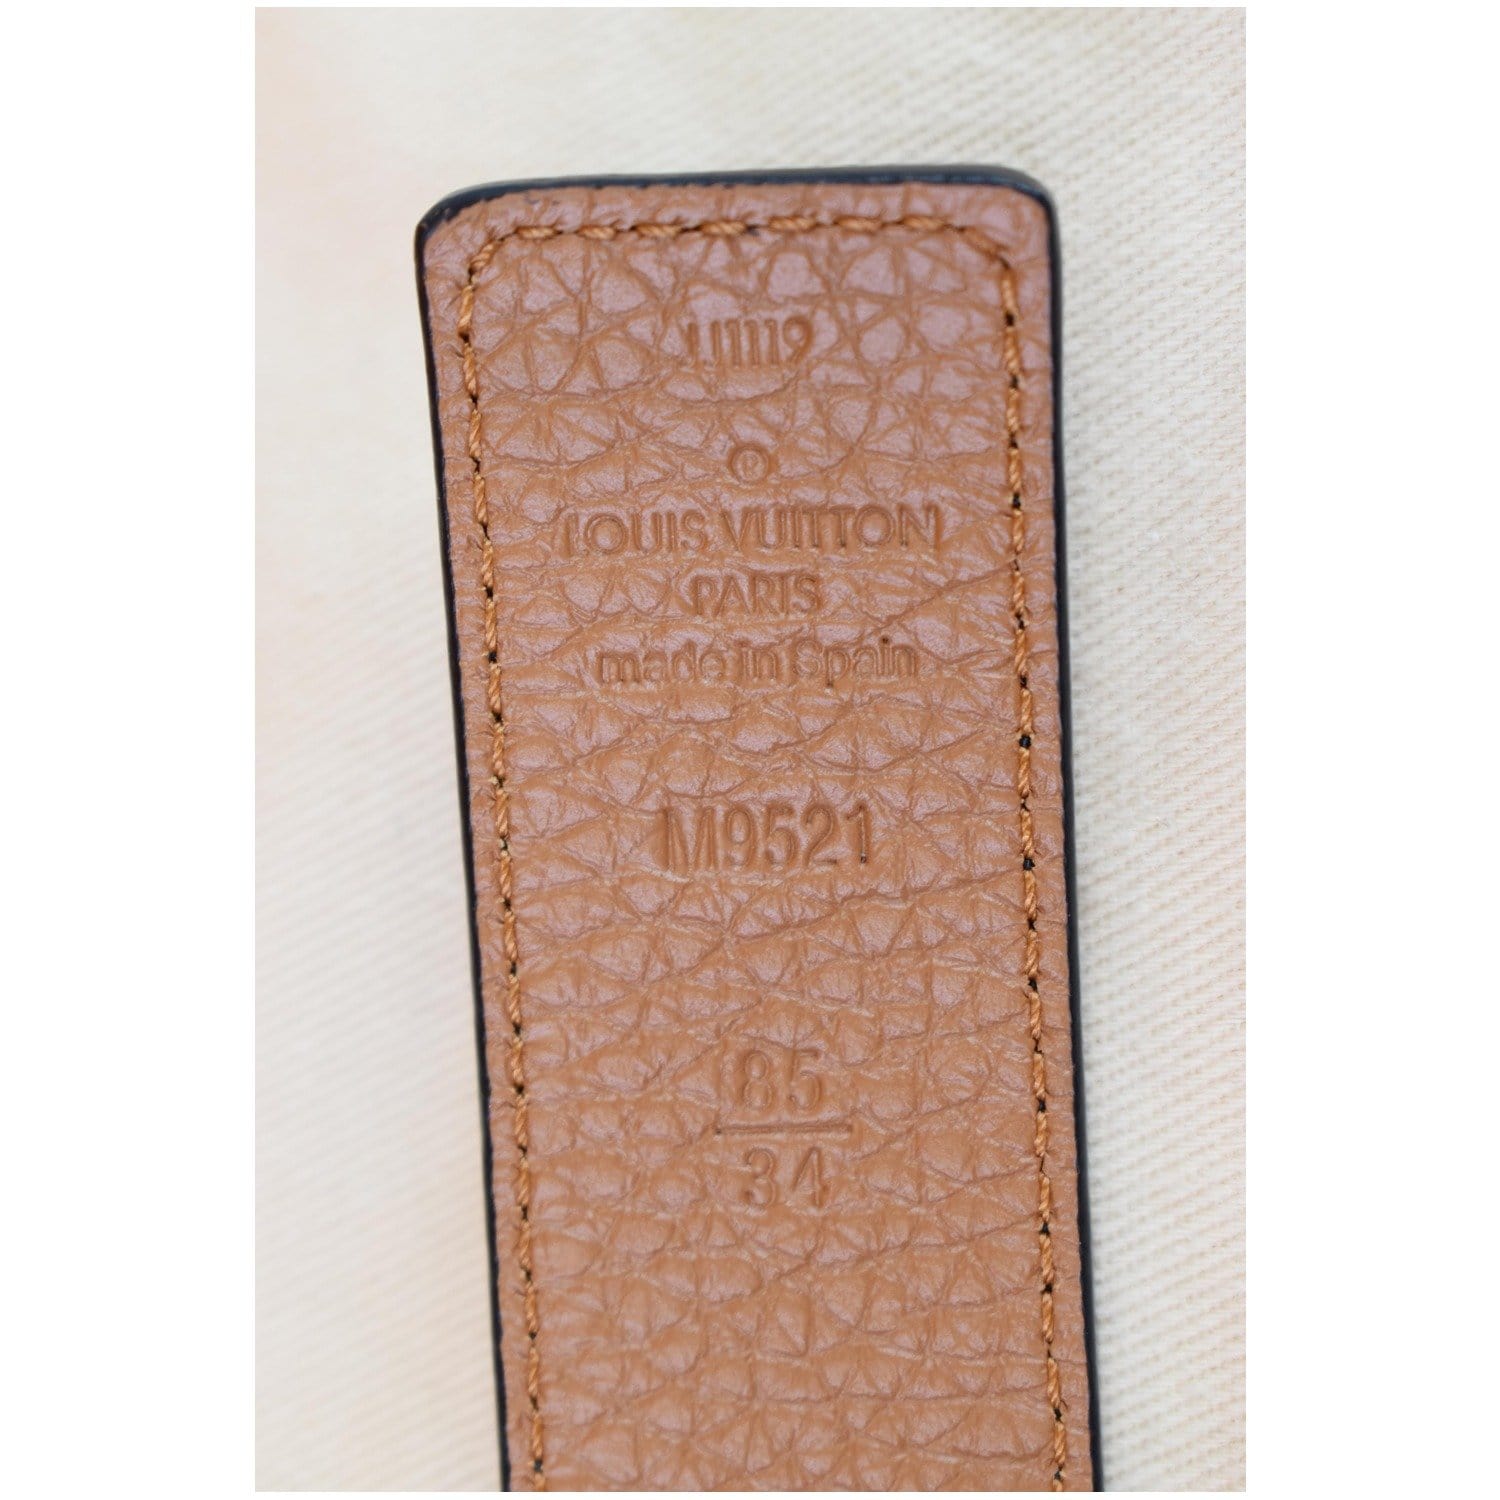 Louis Vuitton Belt LV Initiales Reversible 1.5 Width Monogram Noir Black/Brown